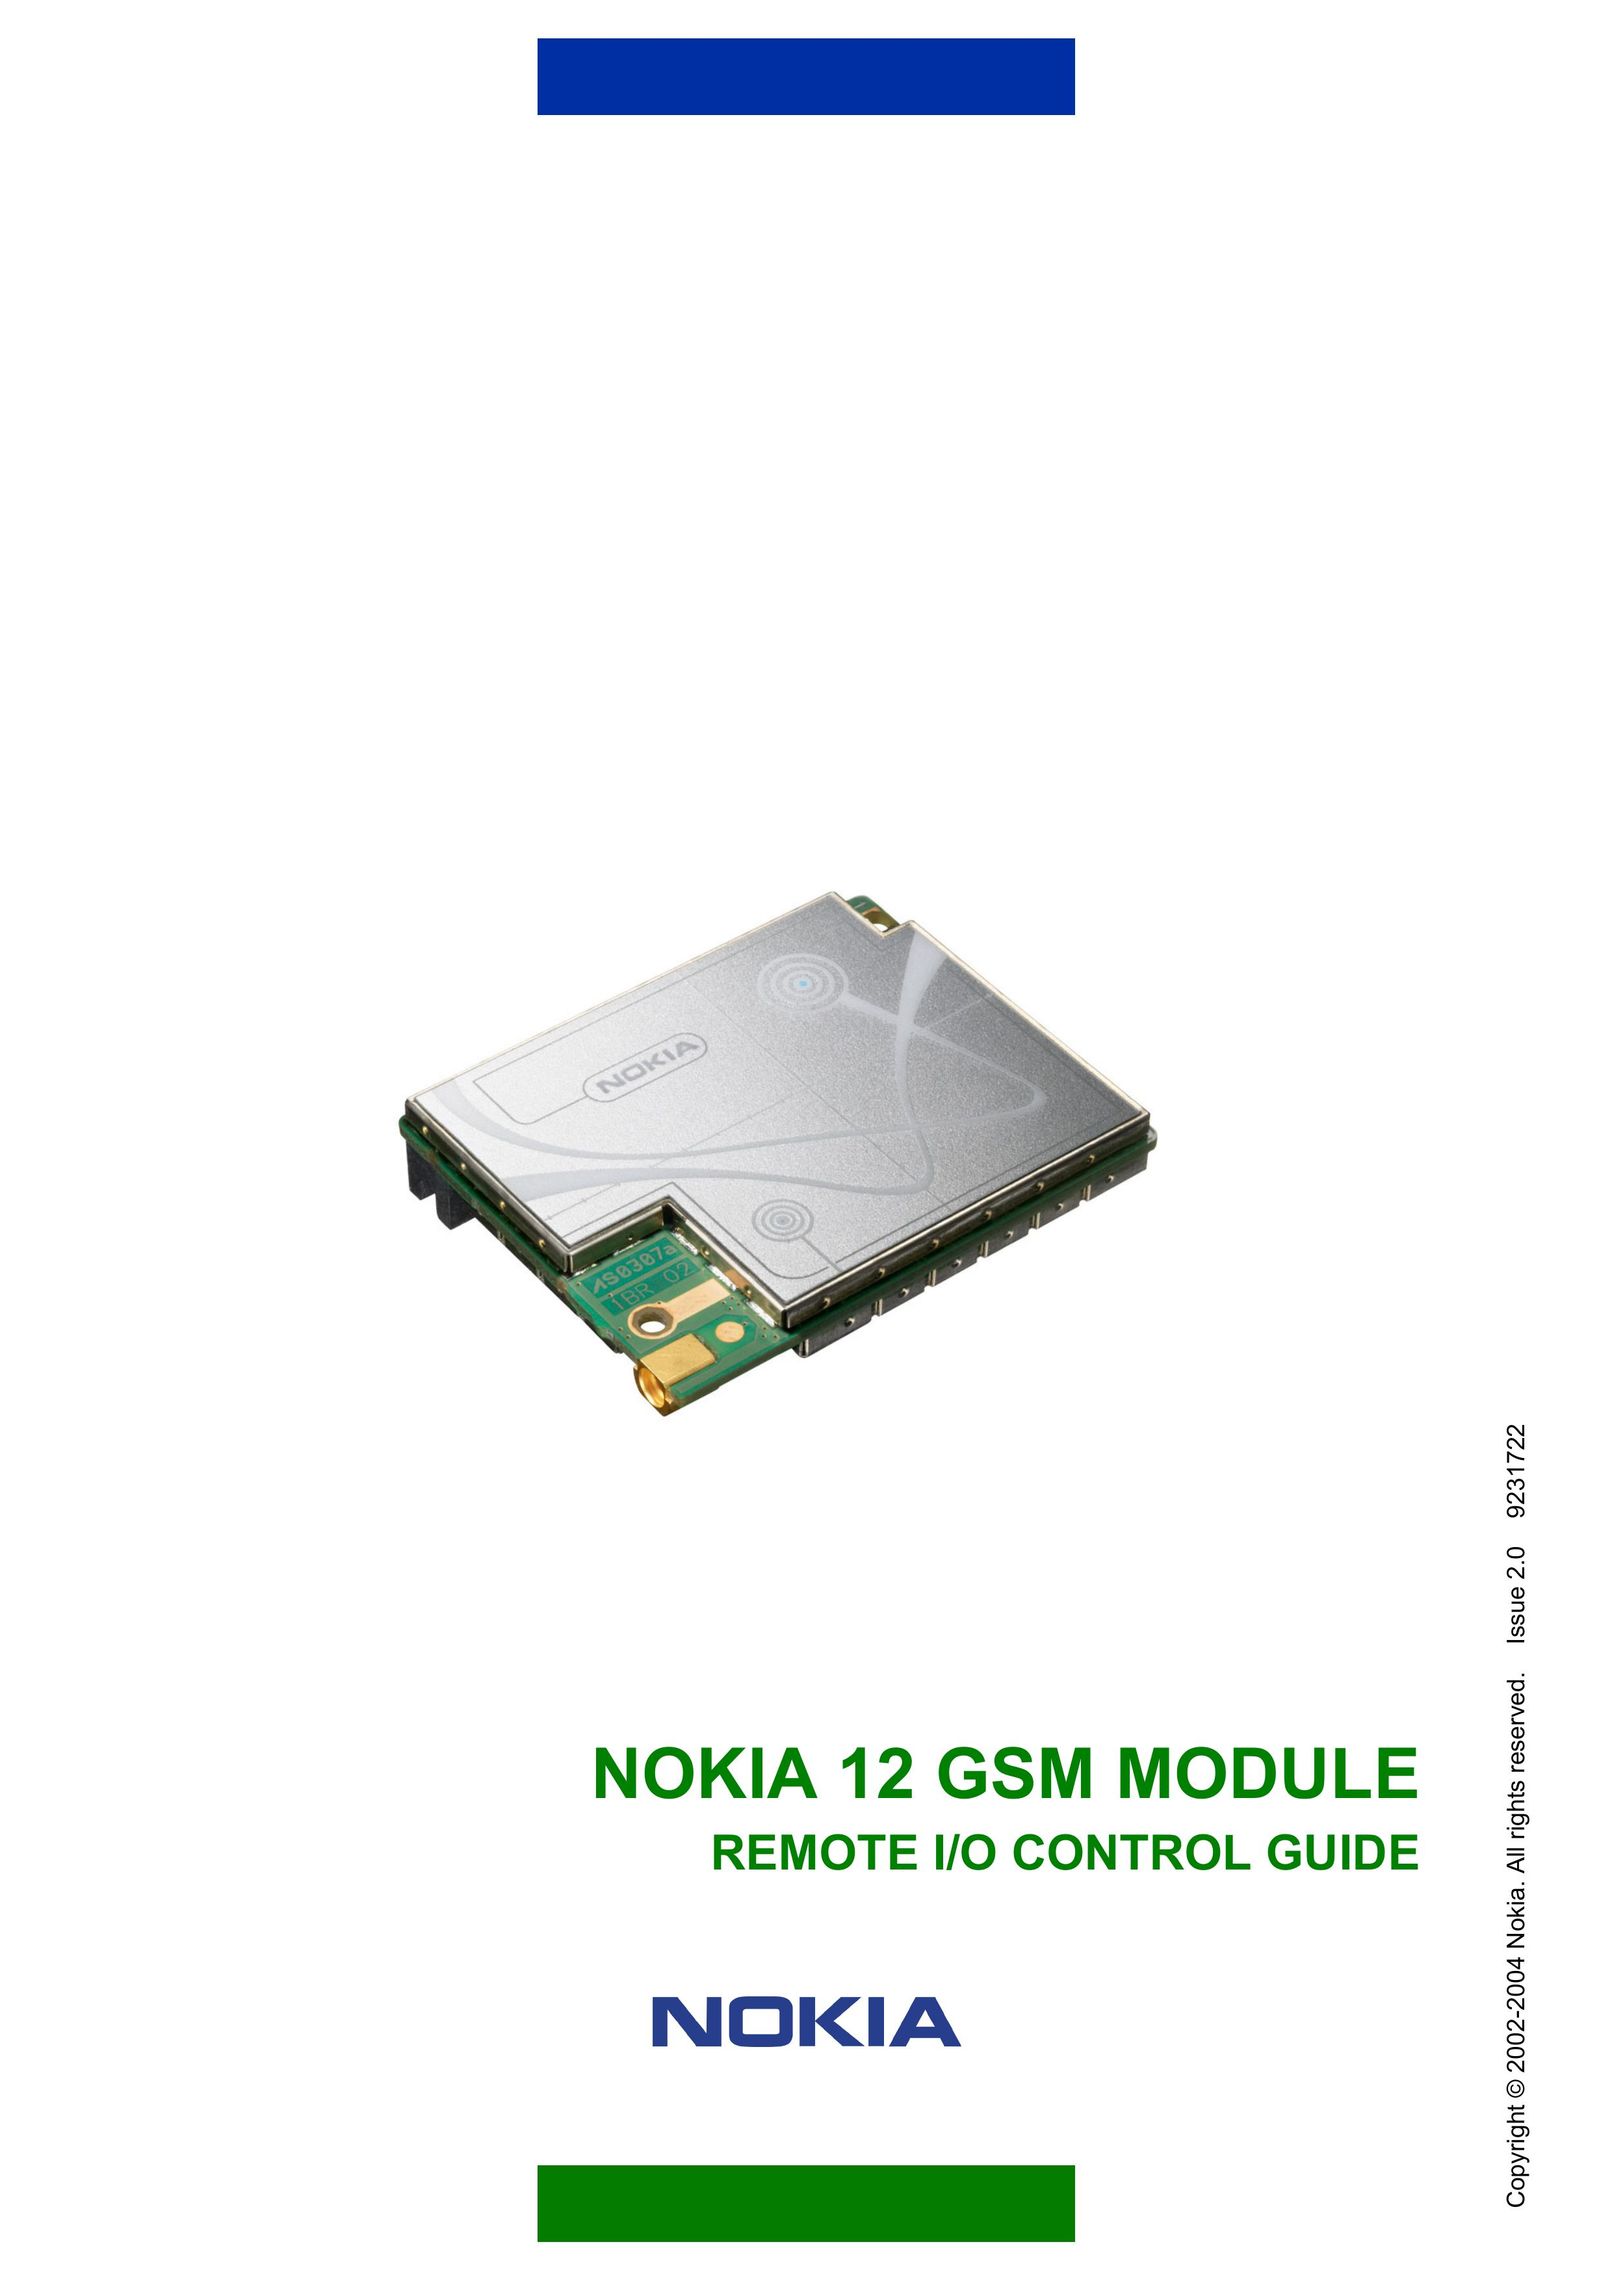 Nokia 12 GSM MODULE REMOTE I/O Network Card User Manual